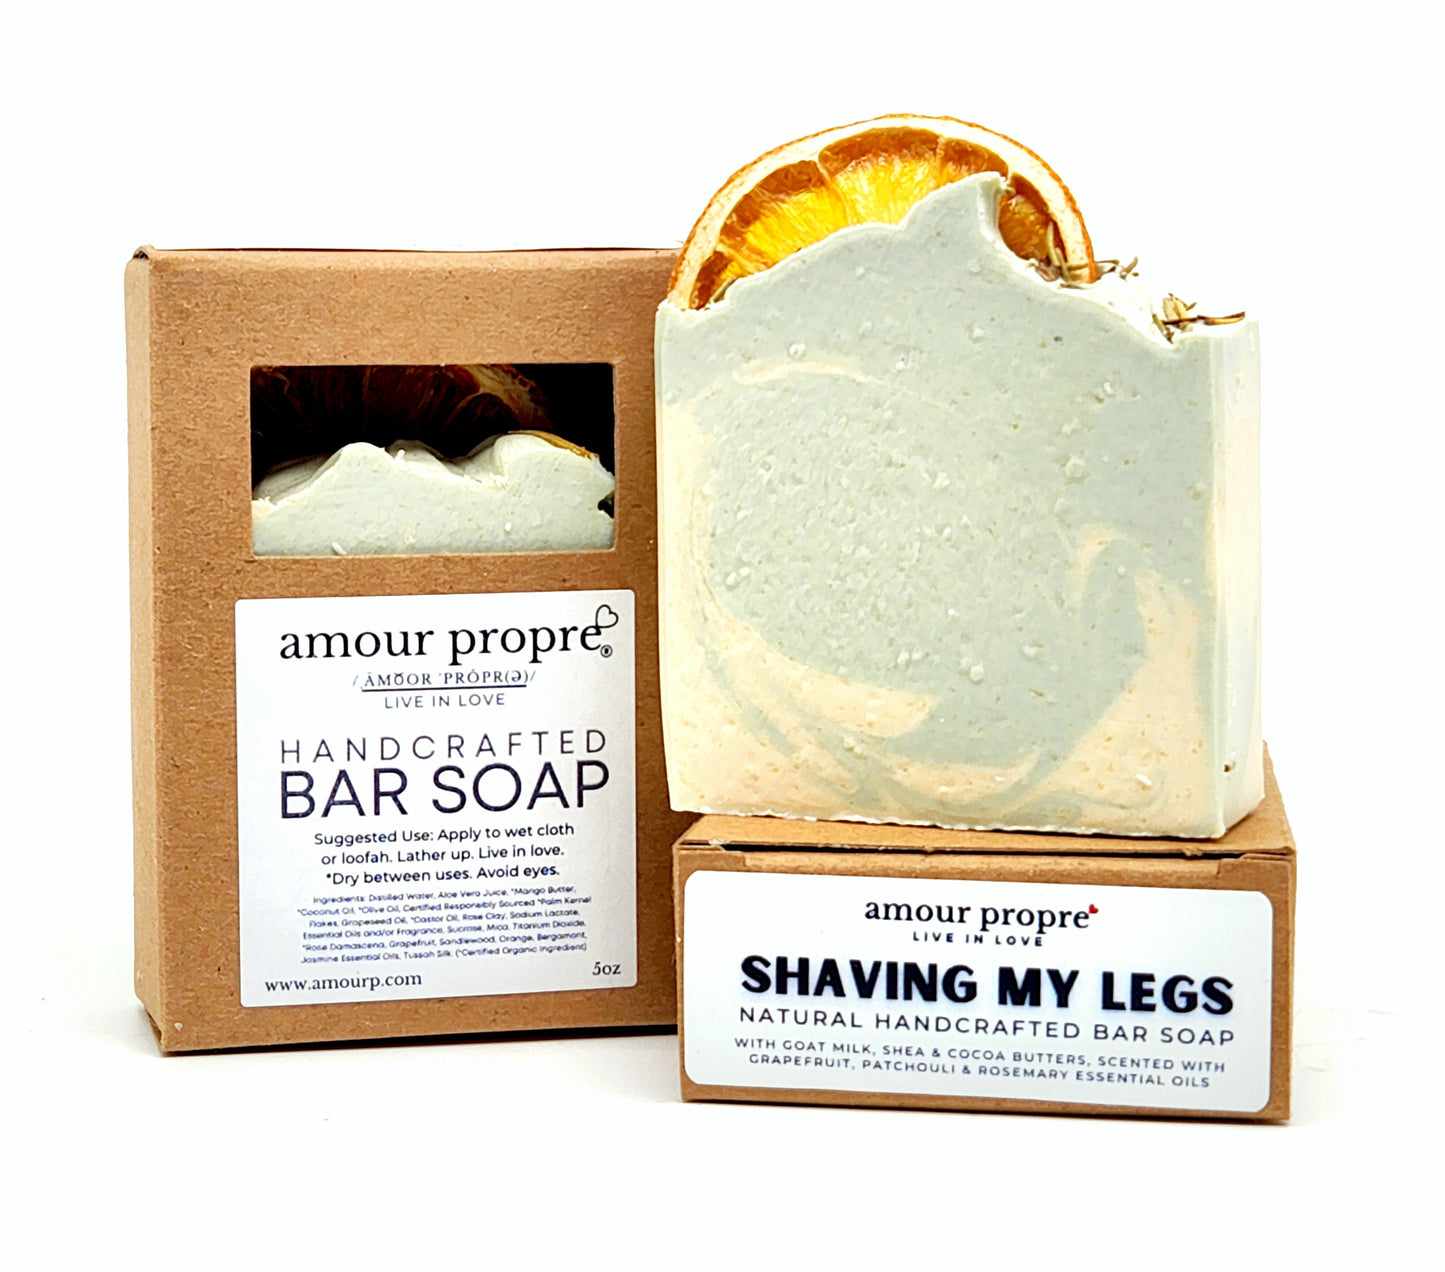 "Shaving My Legs" Goat's Milk Handcrafted Bar Soap